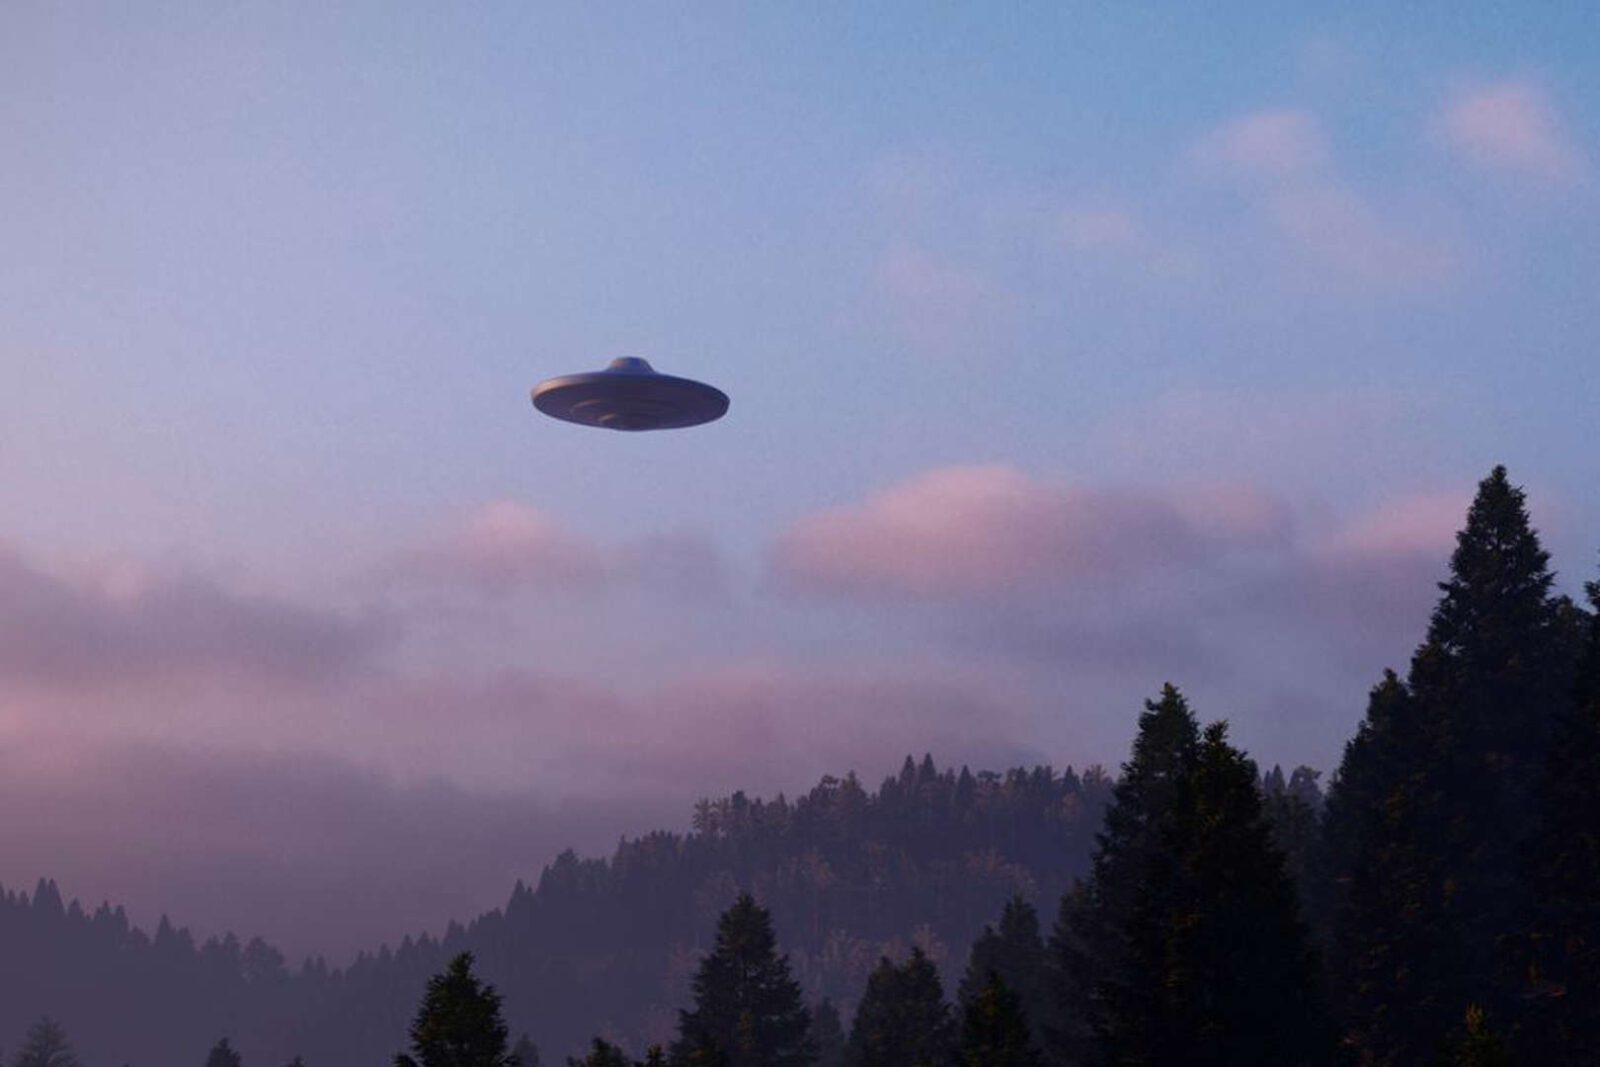 Pentagon launches website focusing on UFO investigations